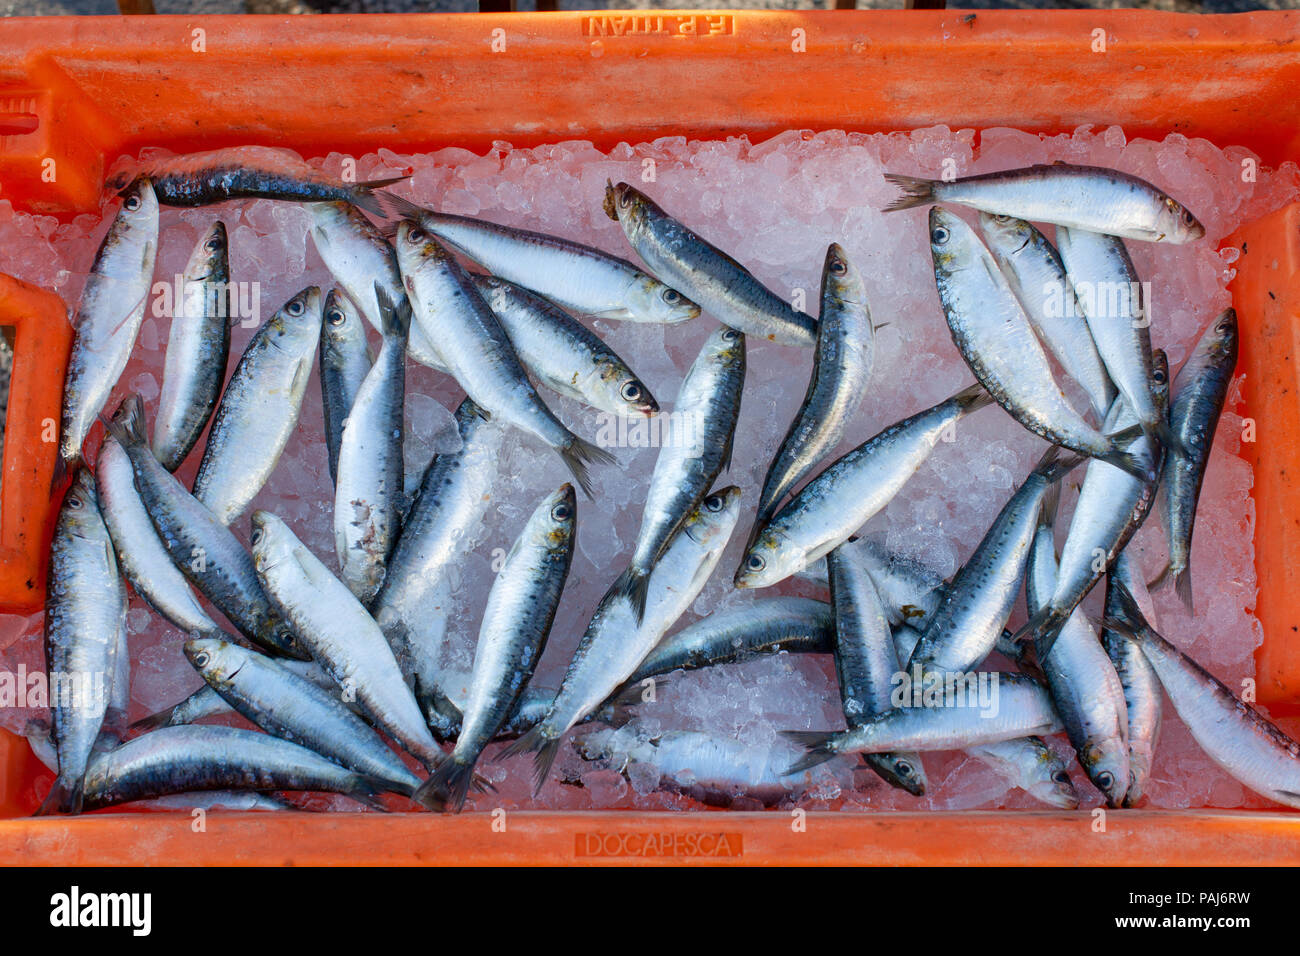 Fish, fishmarket Stock Photo